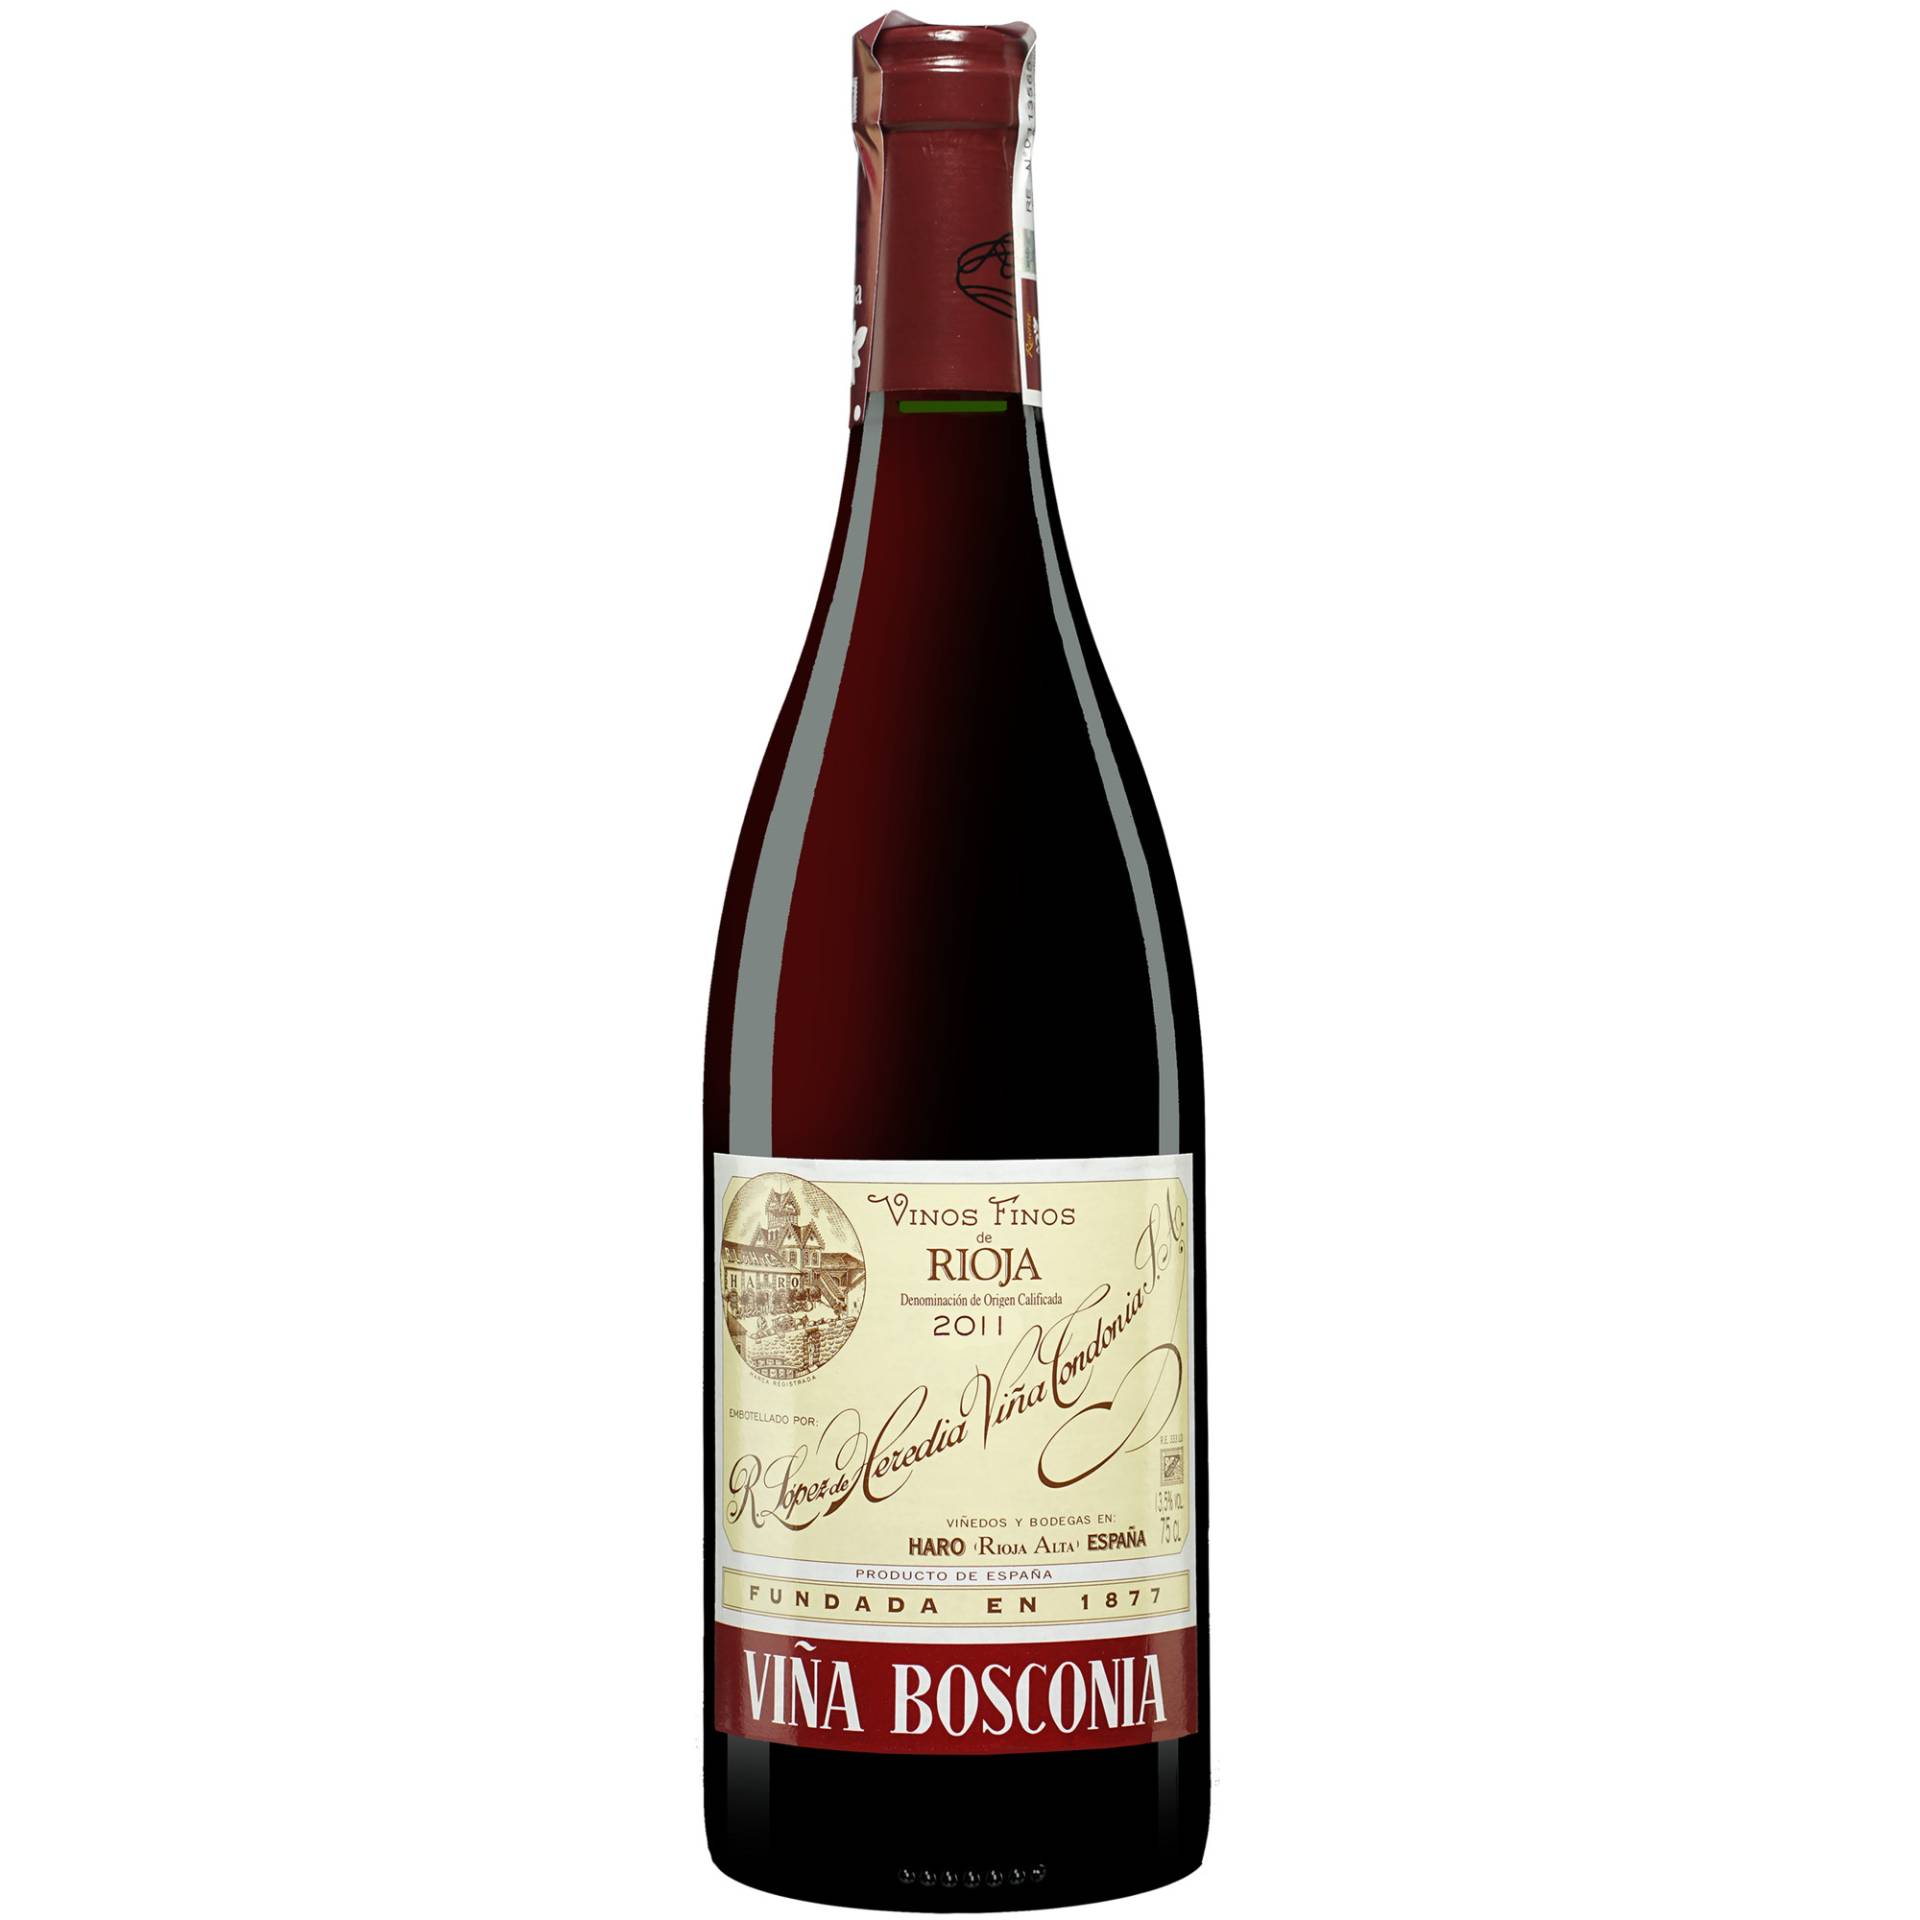 Tondonia »Viña Bosconia« Tinto Reserva 2011  0.75L 13.5% Vol. Rotwein Trocken aus Spanien von López de Heredia - Viña Tondonia